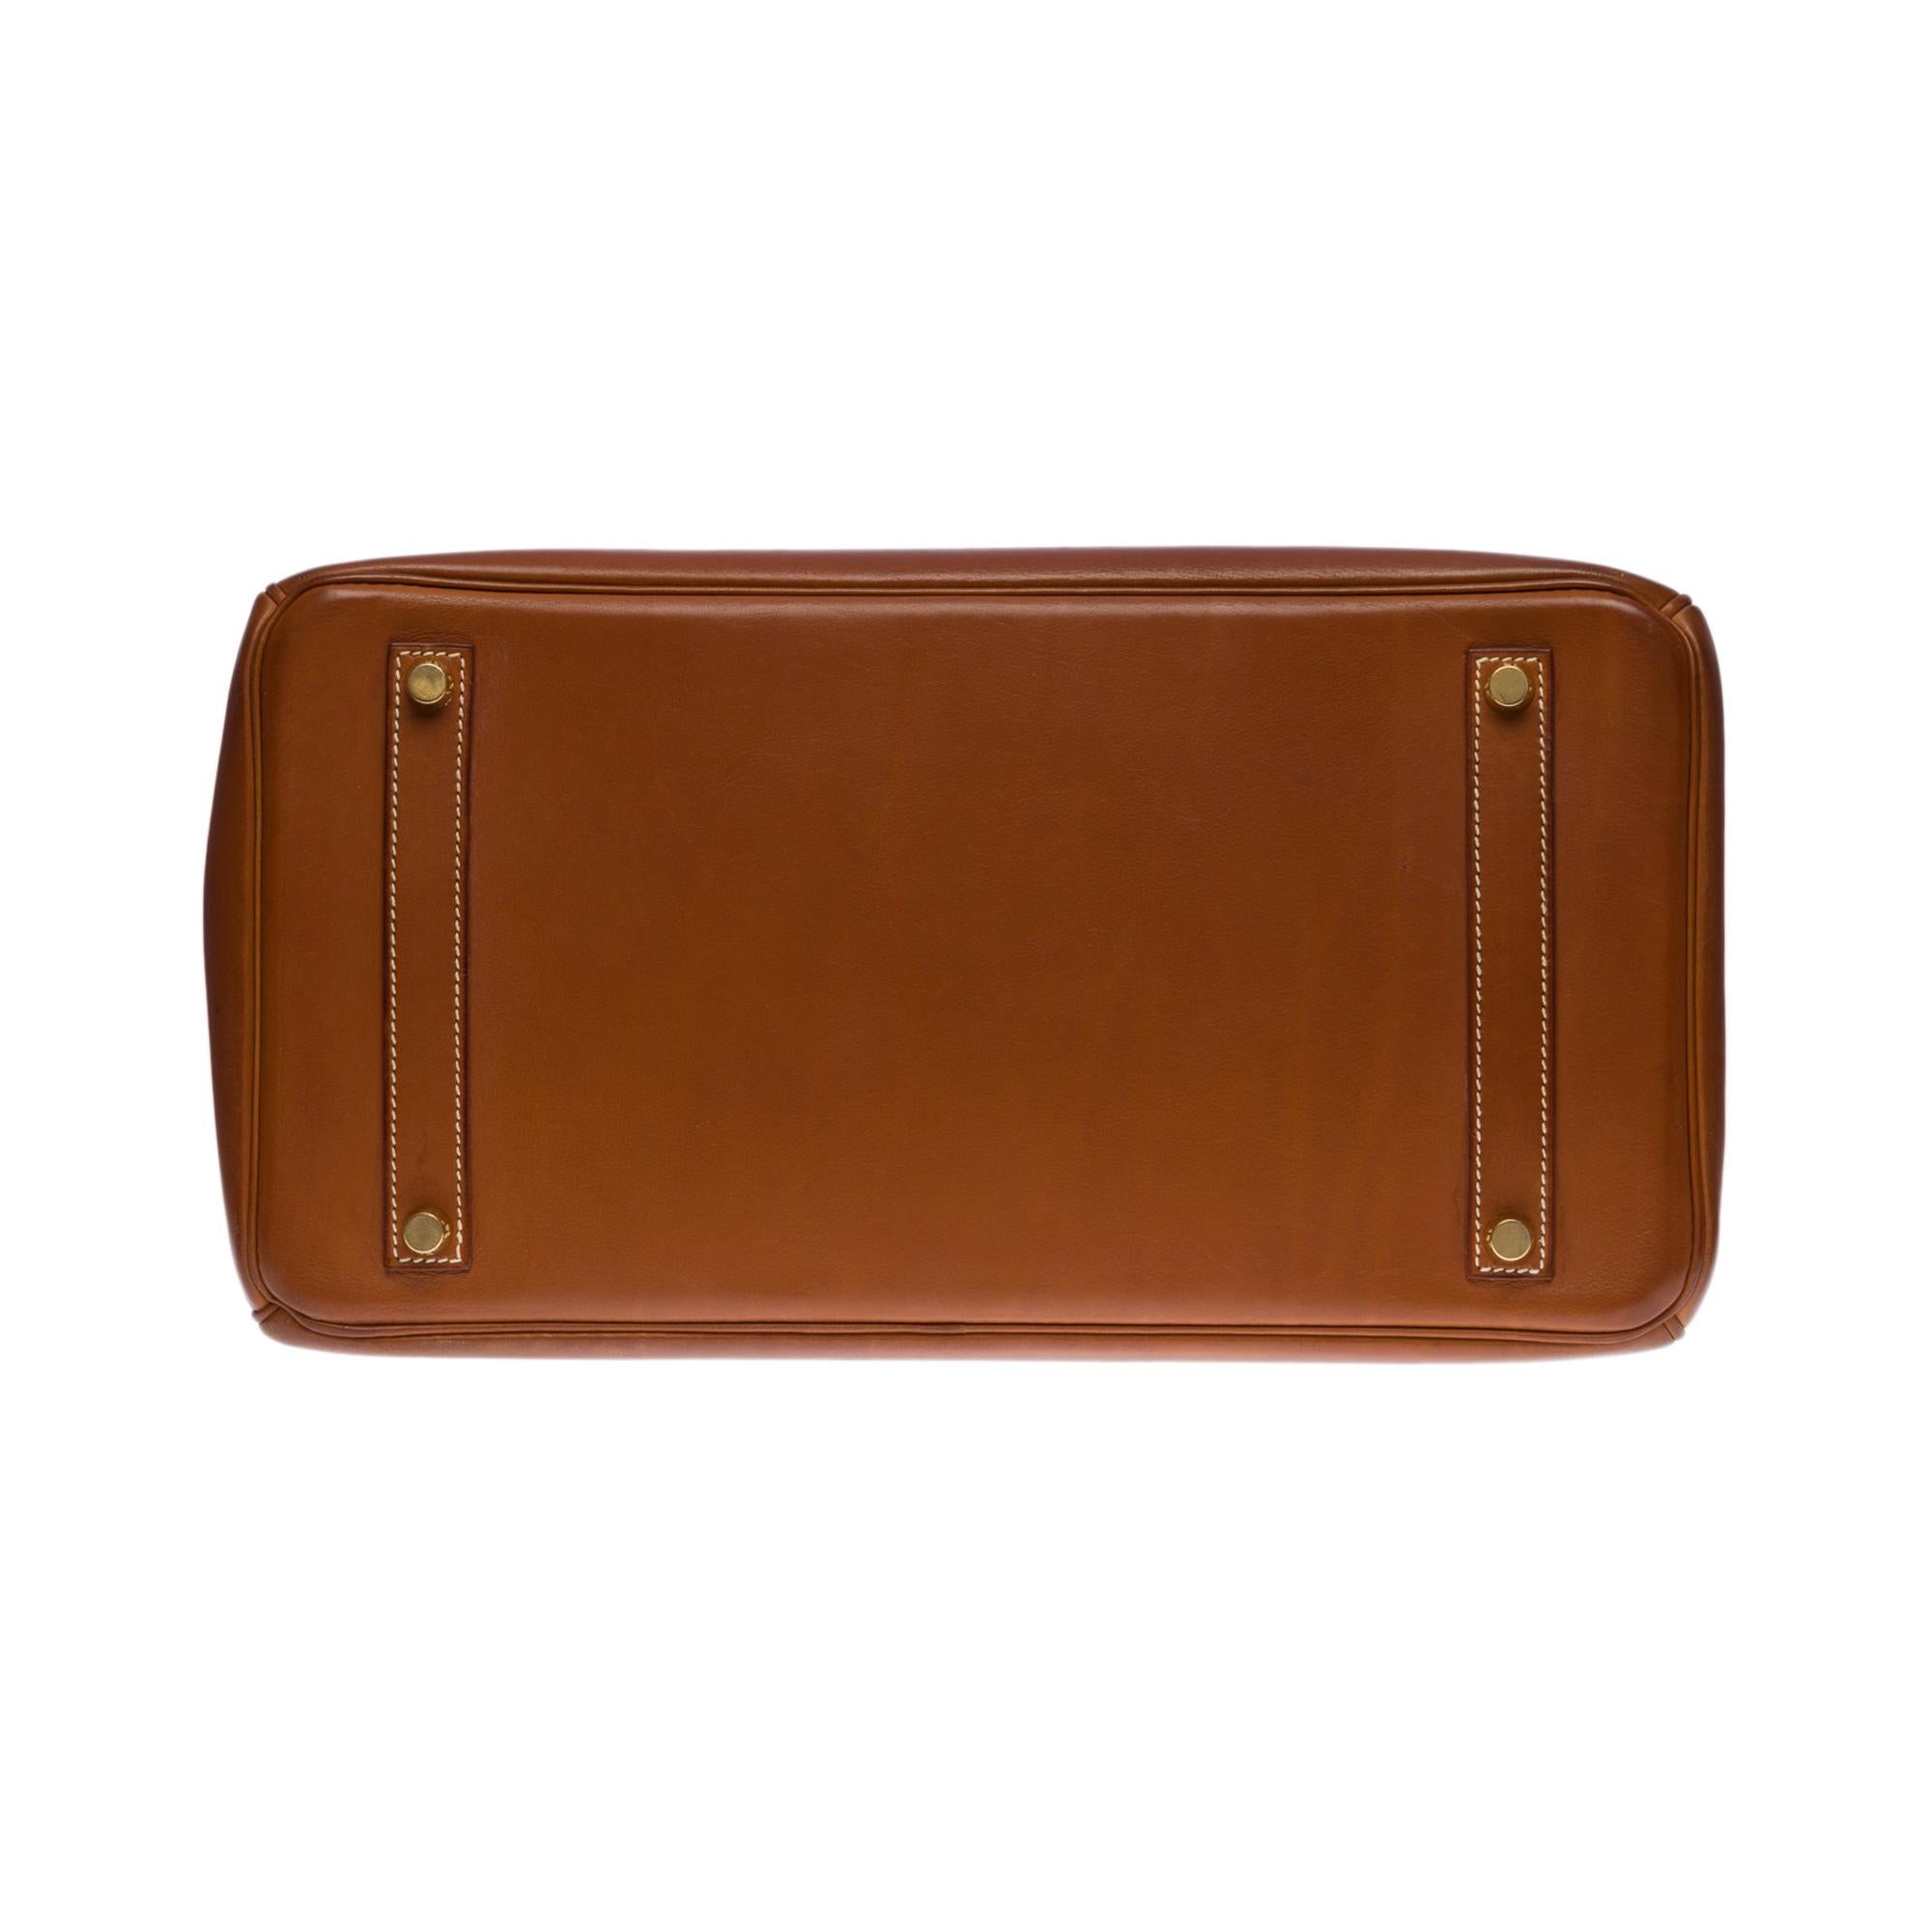 Rare & Exceptional Hermès Birkin 35 handbag in Gold Barenia leather, GHW 1